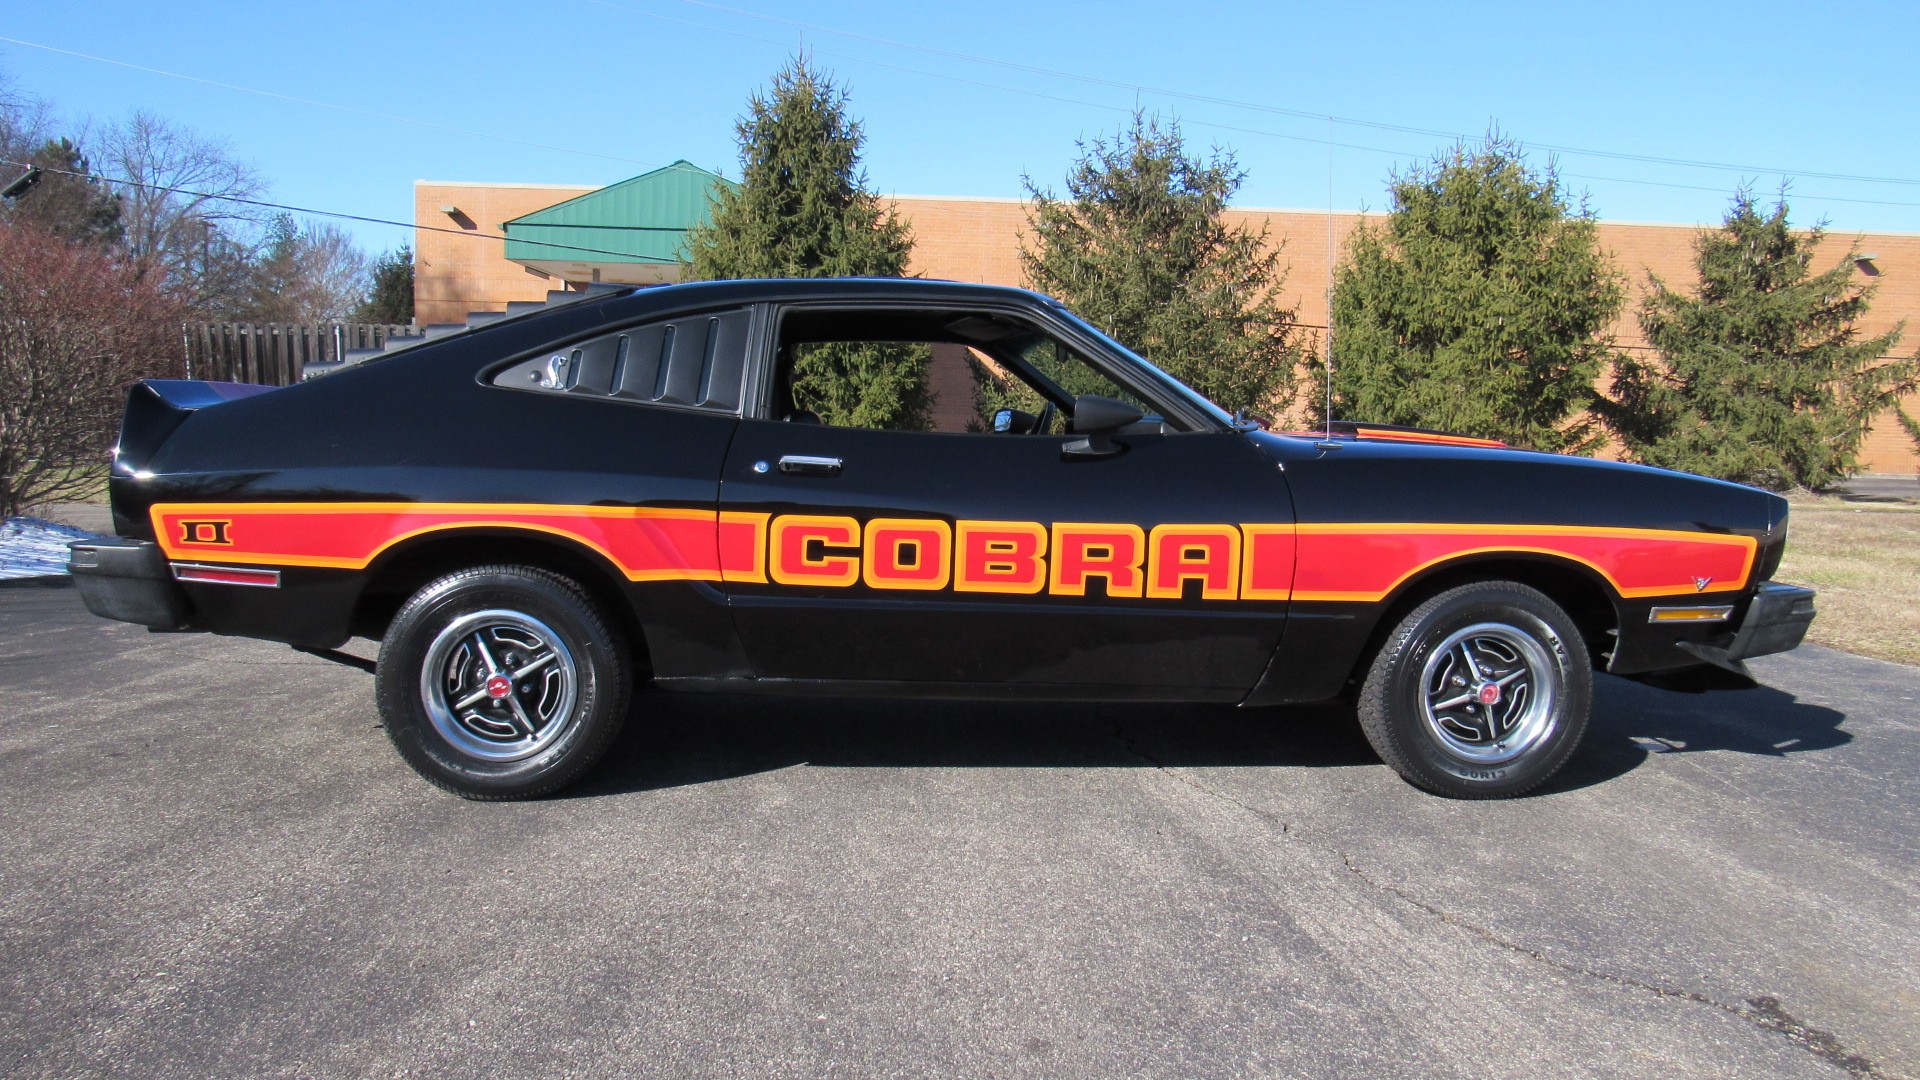 1977 Mustang Cobra II, Auto, Nice Driver, SOLD!